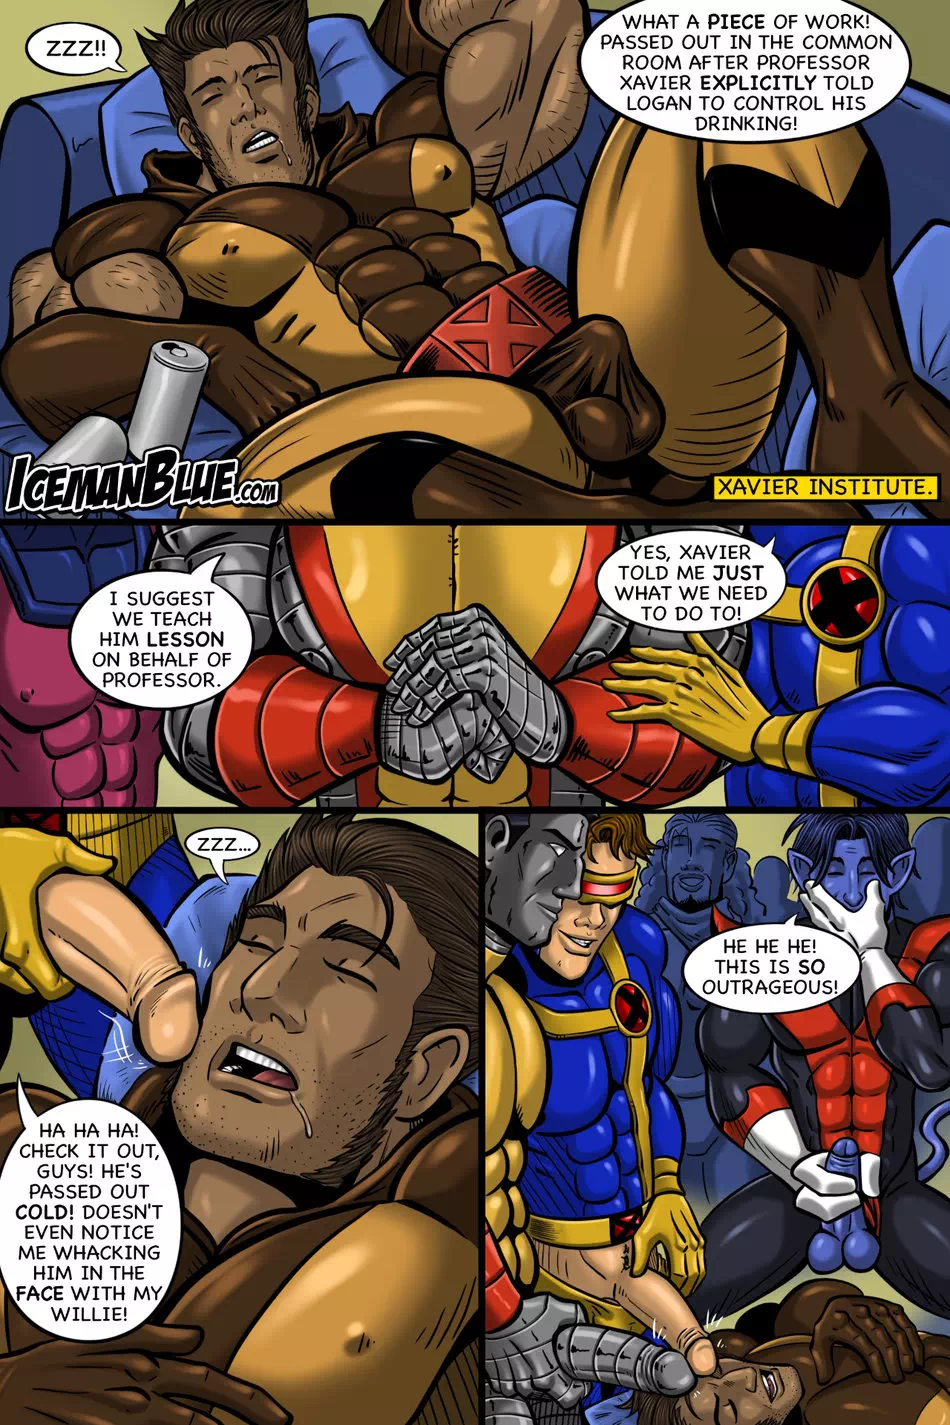 Yaoi porn comics X-Men â€“ Wolverine